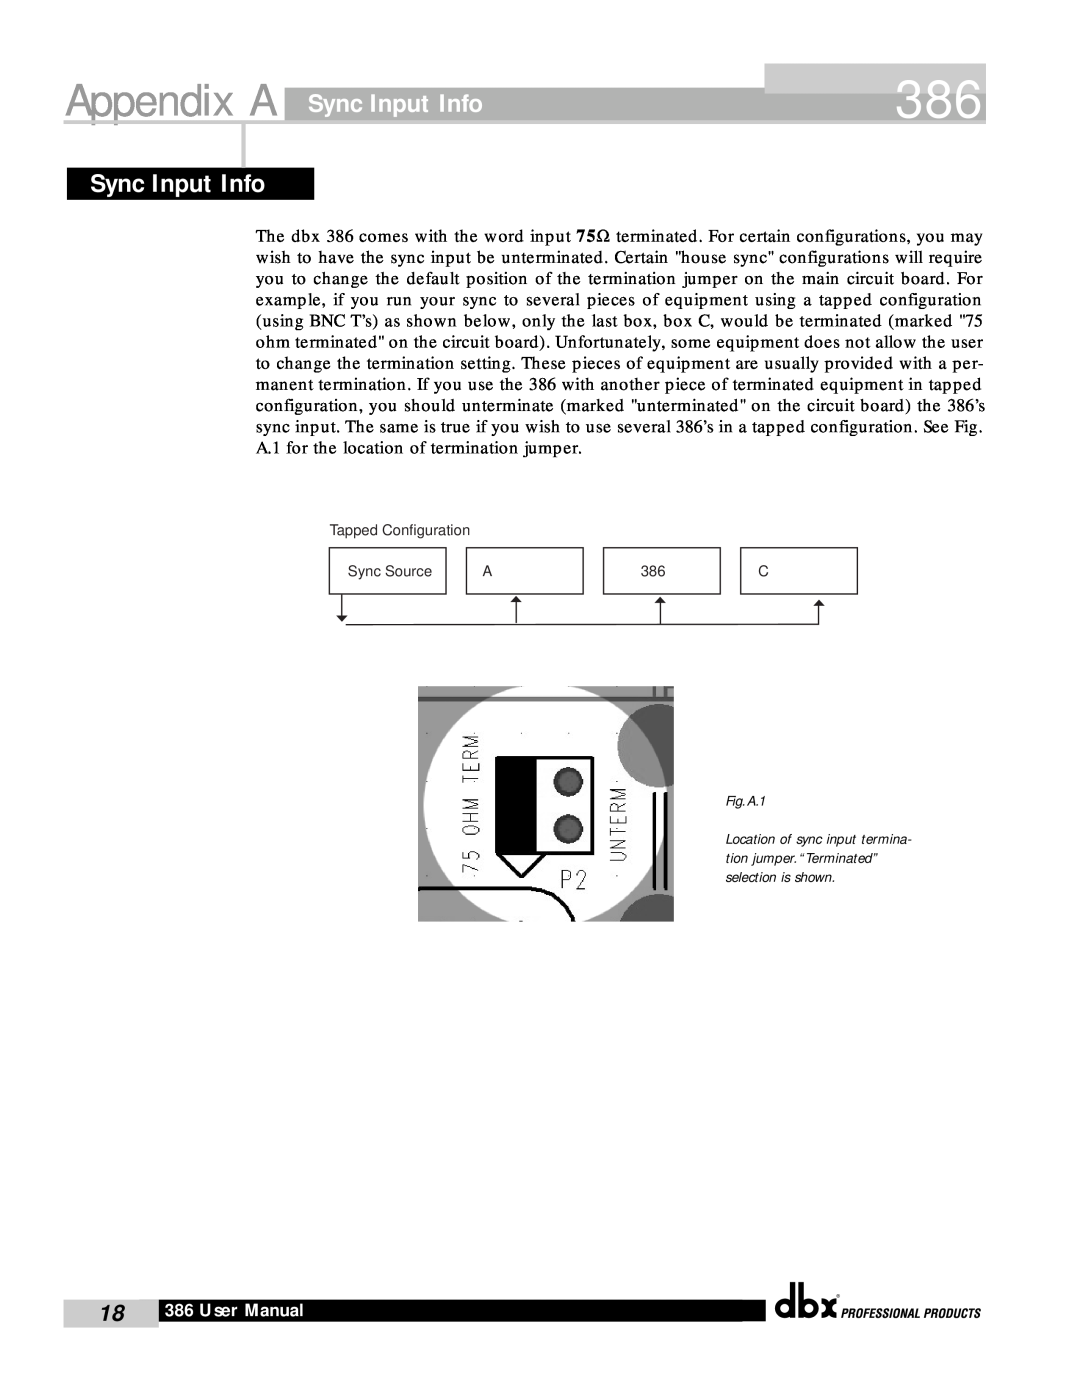 dbx Pro 386 user manual Appendix A, Sync Input Info, User Manual, Fig. A.1 